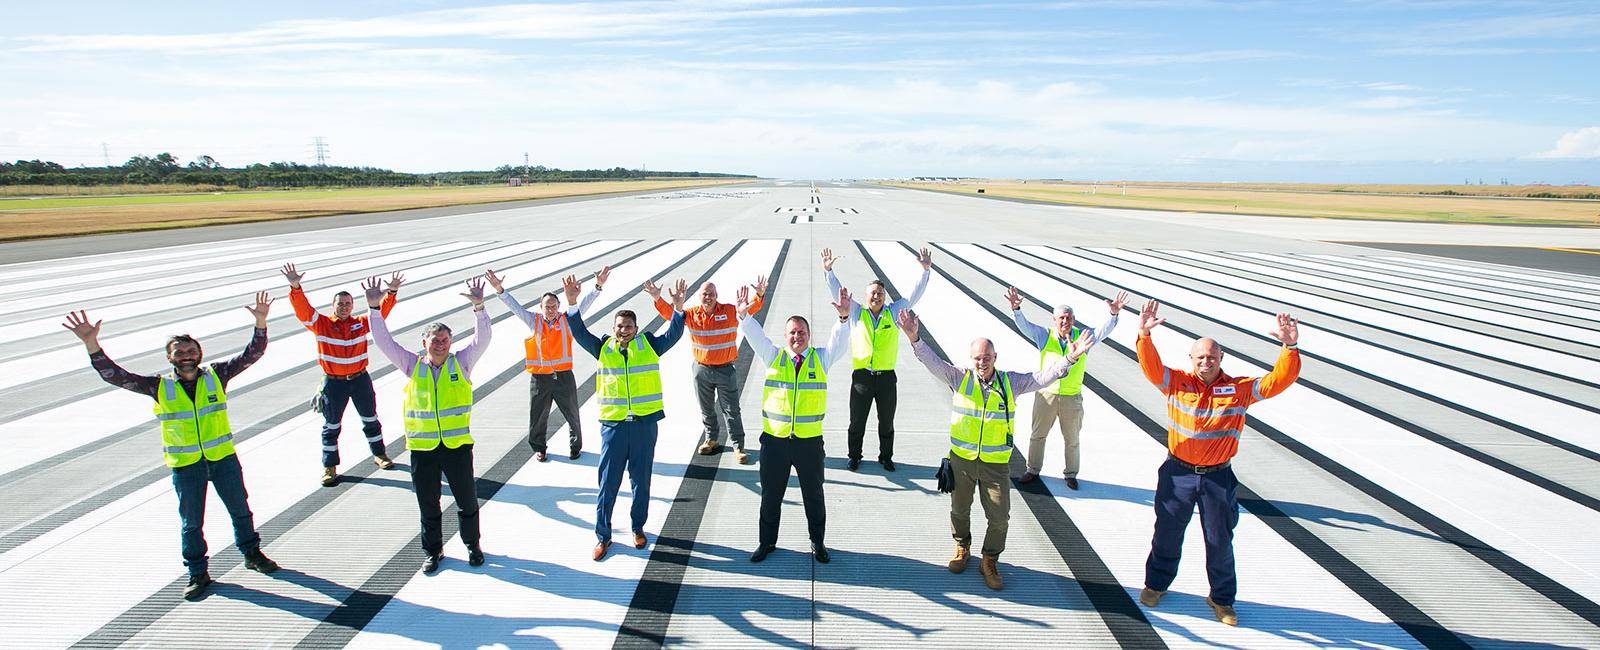 The new runway landed under budget at $1.1 billion